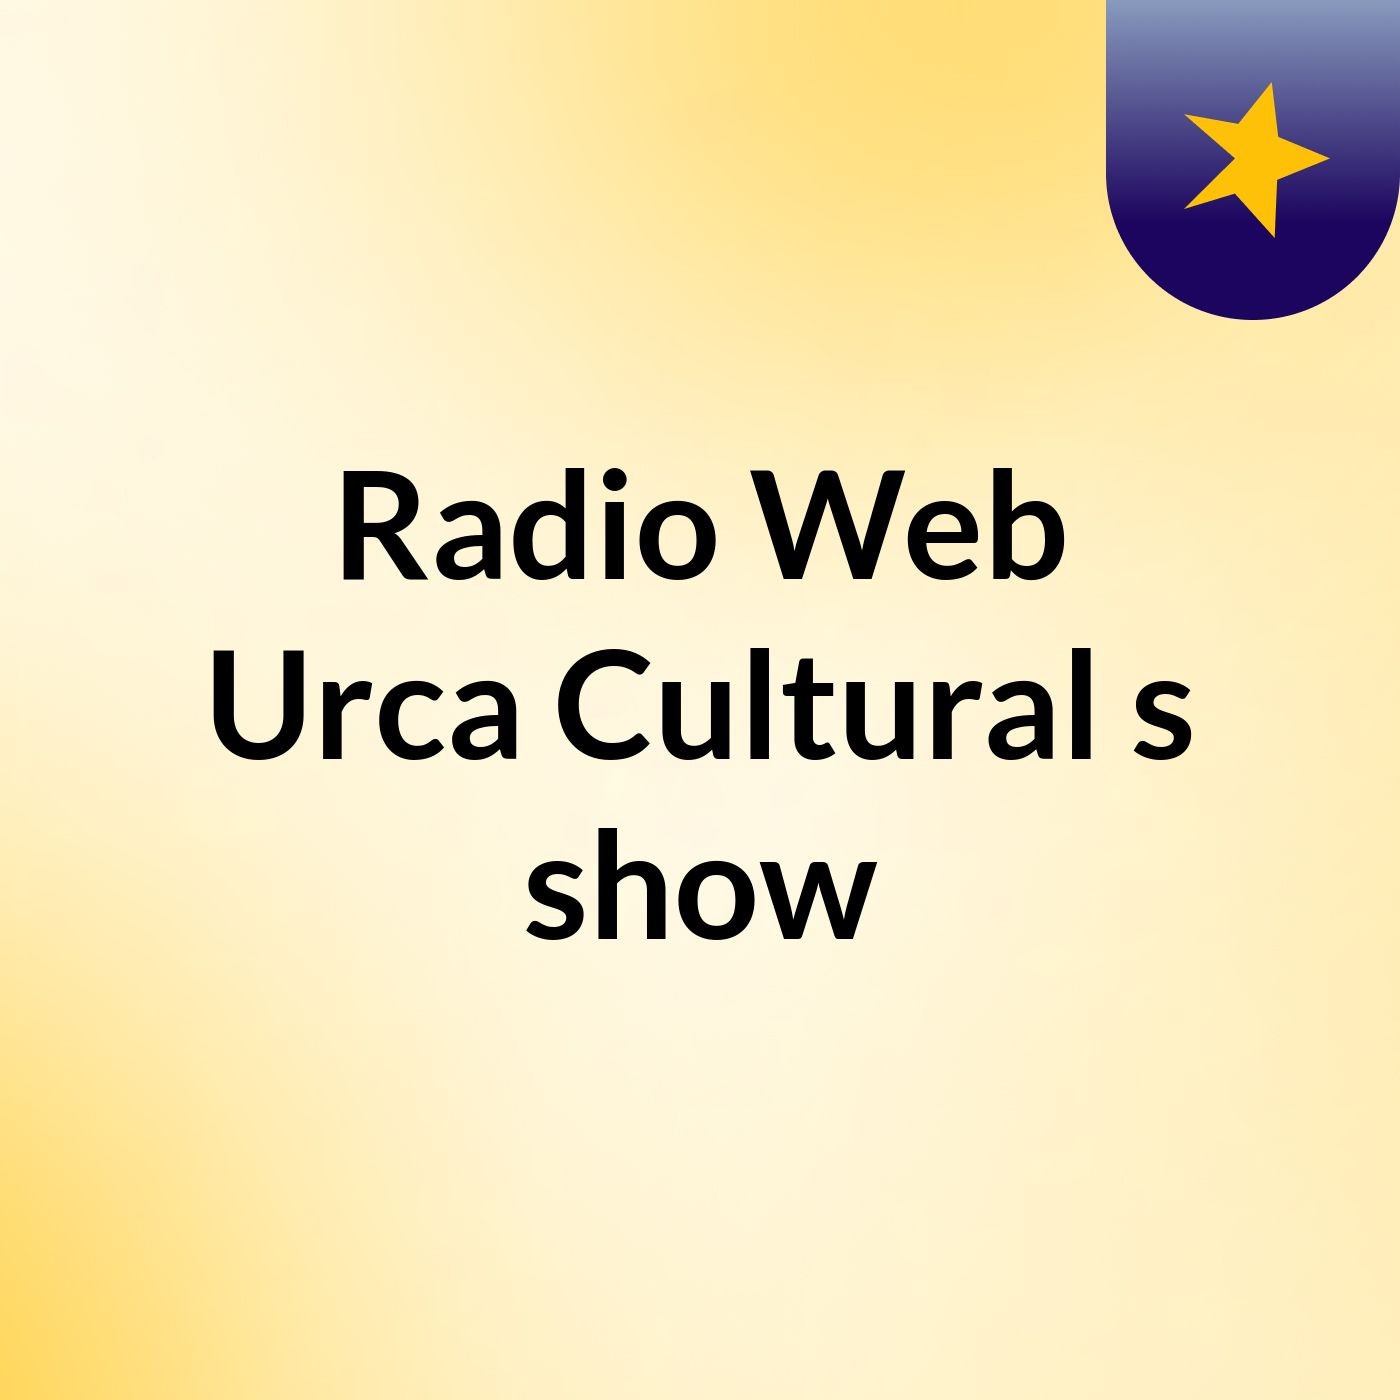 Radio Web Urca Cultural's show